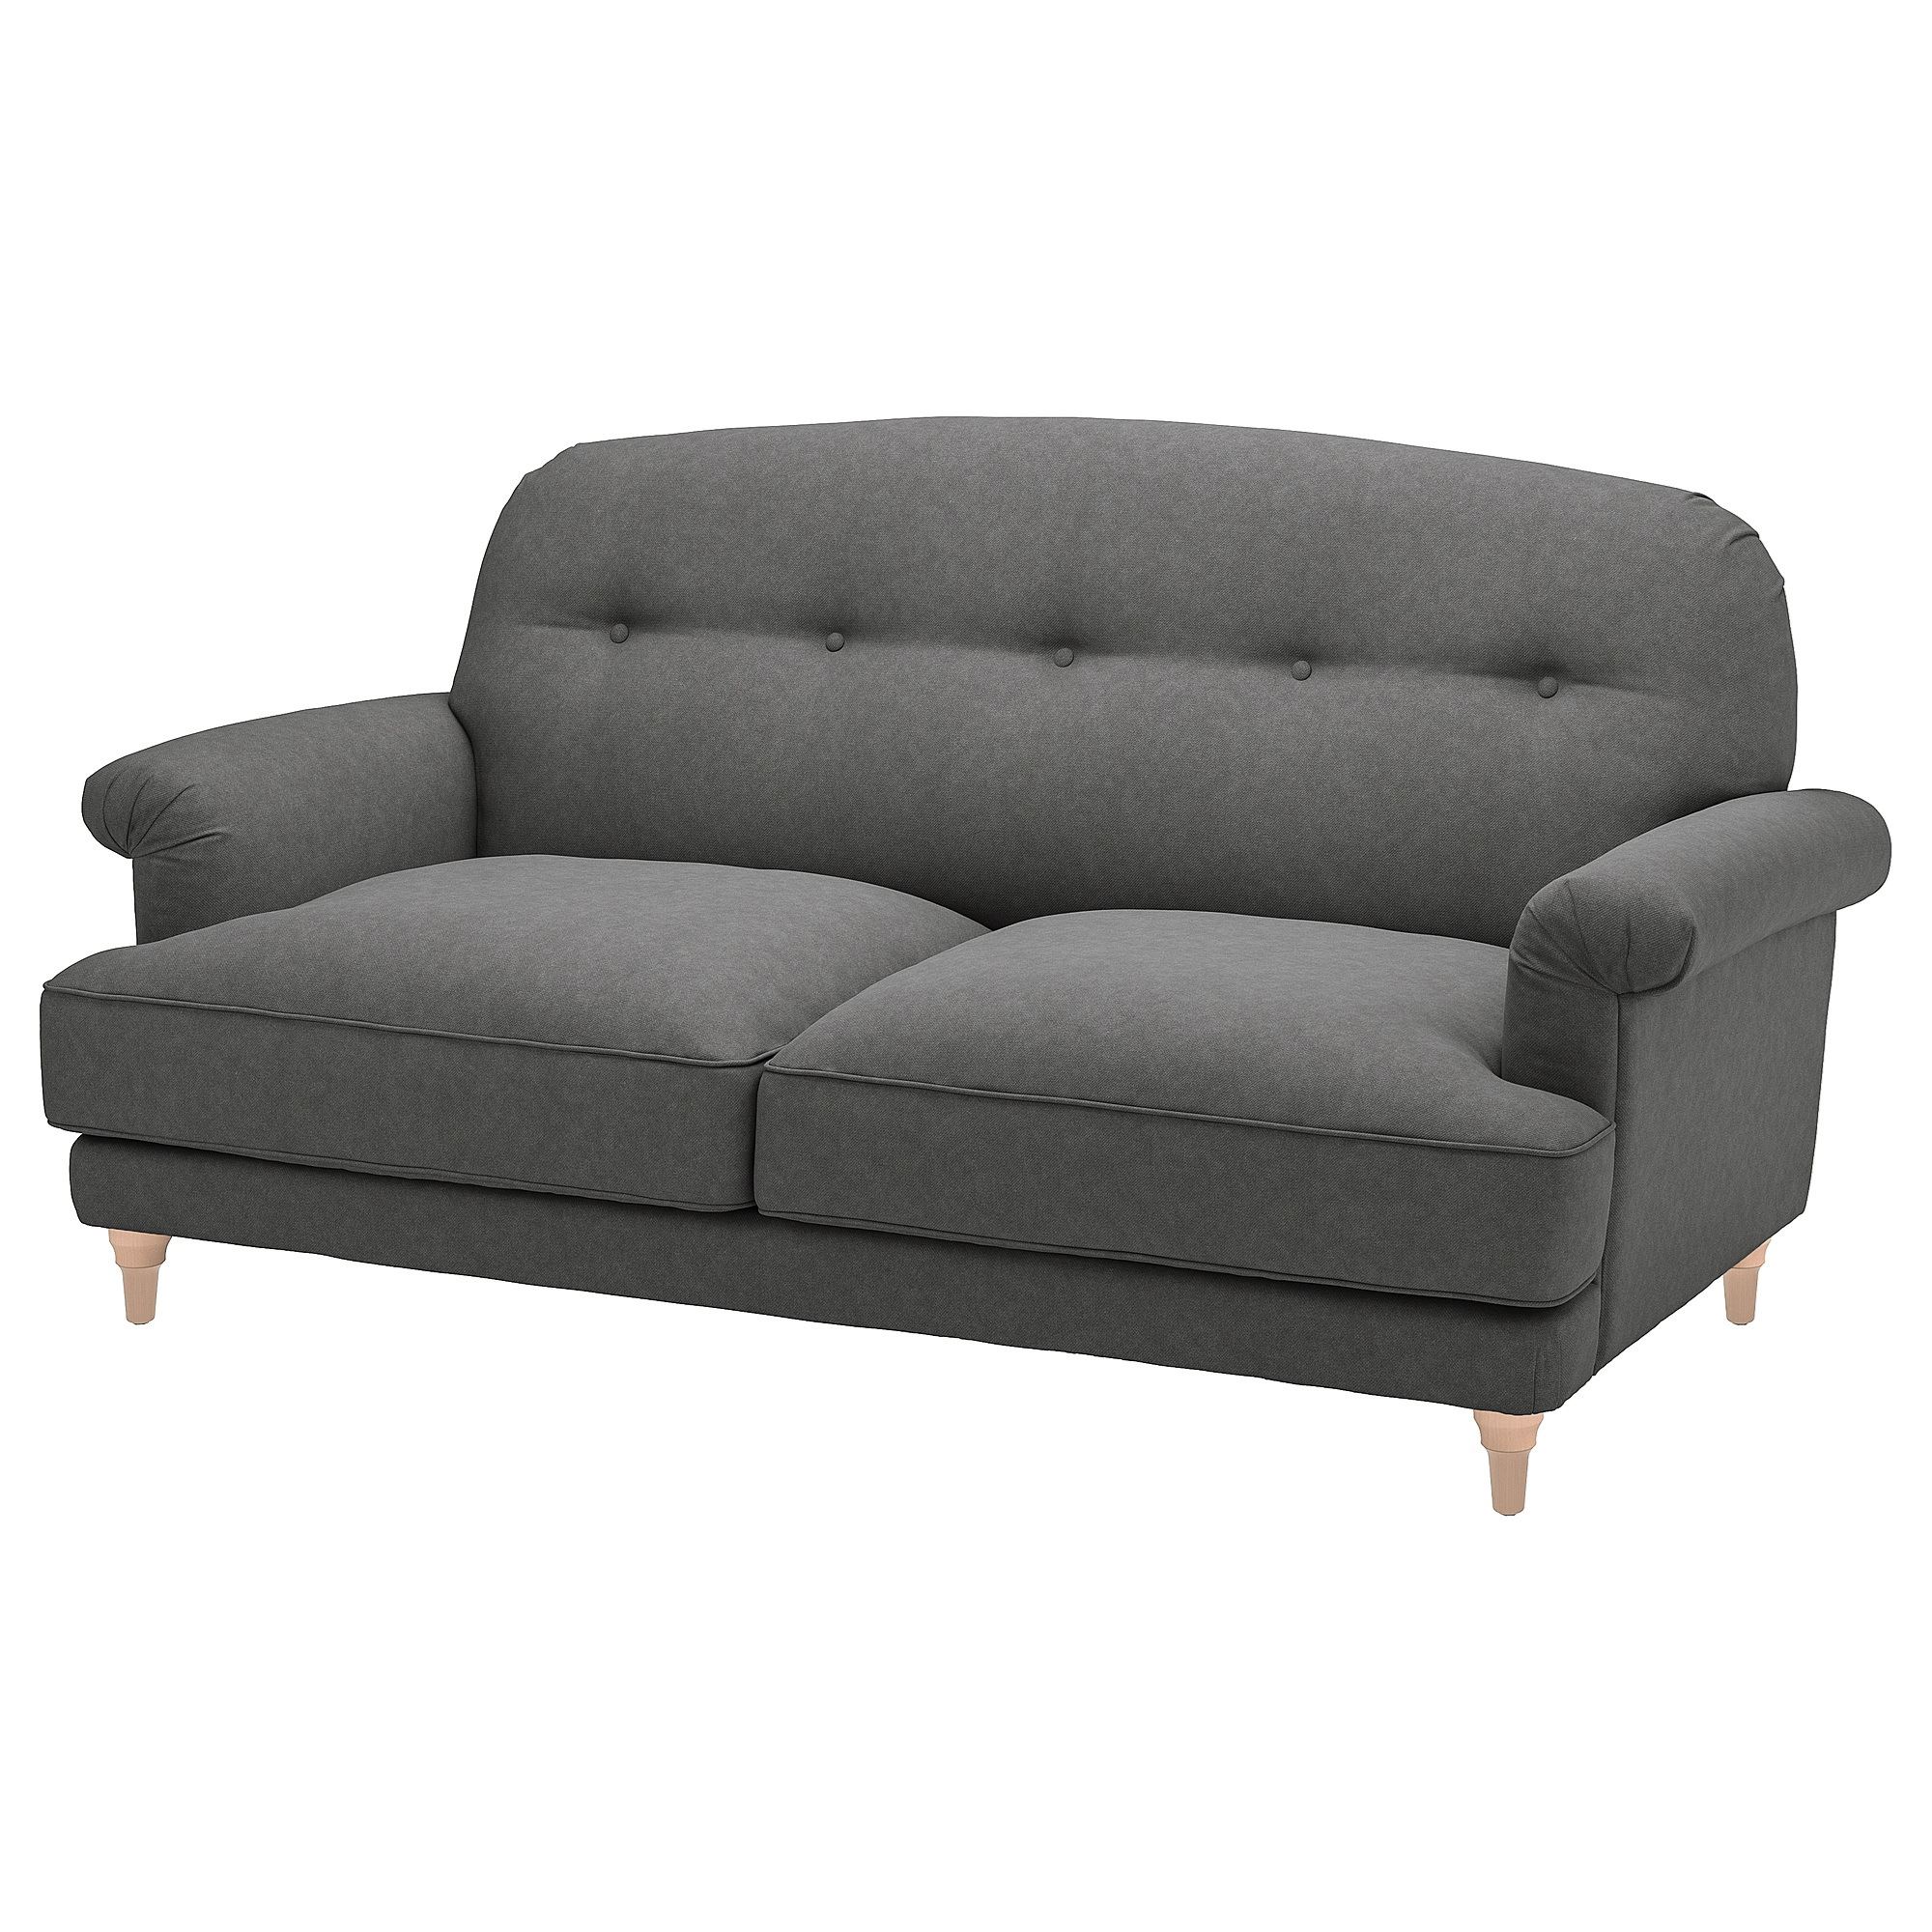 ESSEBODA tallmyra orta gri 2li kanepe | IKEA